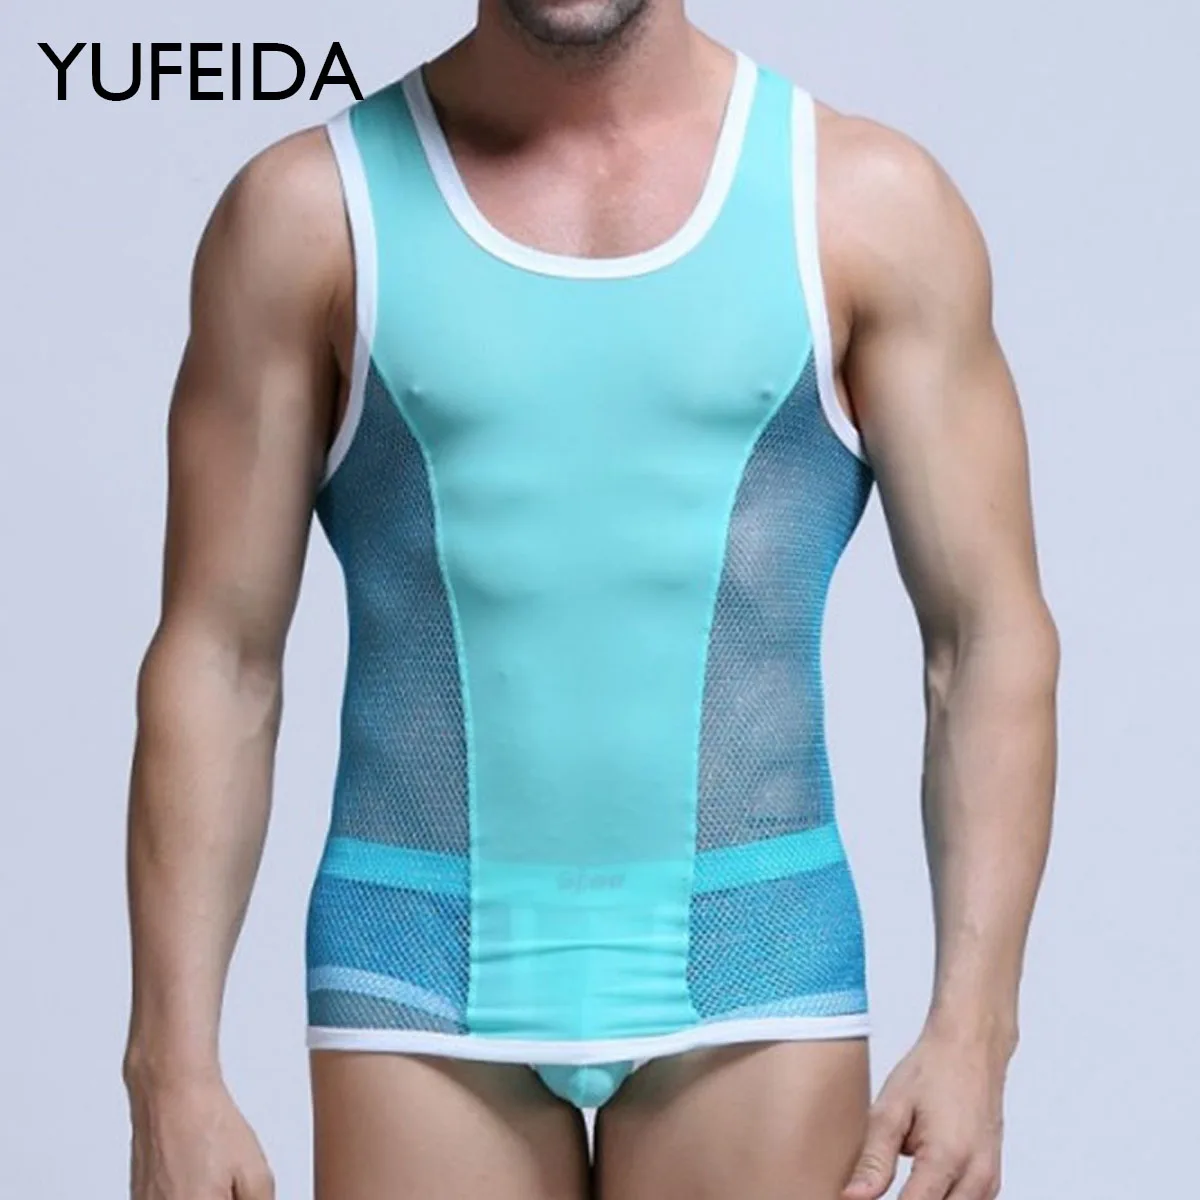 

YUFEIDA Transparent Mesh Sheer Men Tank Top Sleeveless Undershirt Vest See Through Fishnet Muscle Bodybuilding Vest Shorts Sets